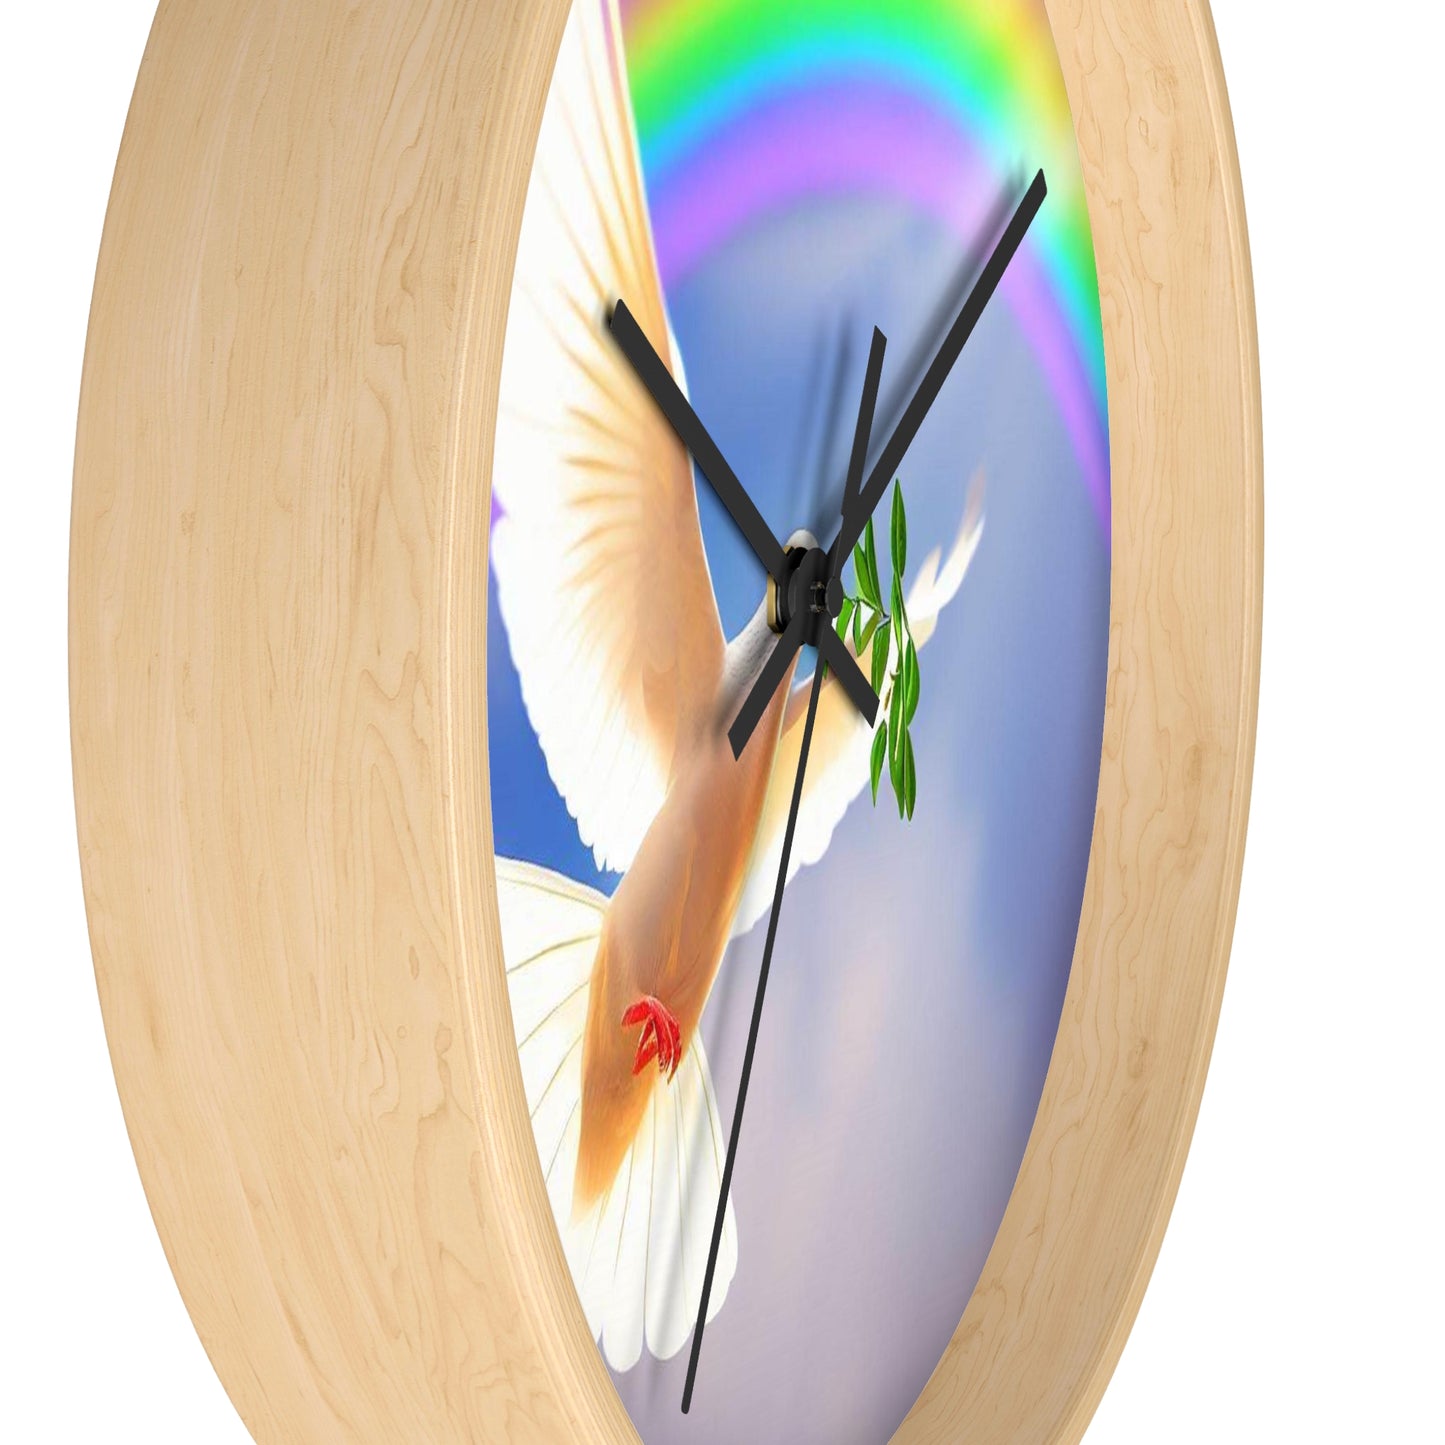 Christian Wall Clock / Jesus clock / Rainbow Clock / Christian Gift Artwork